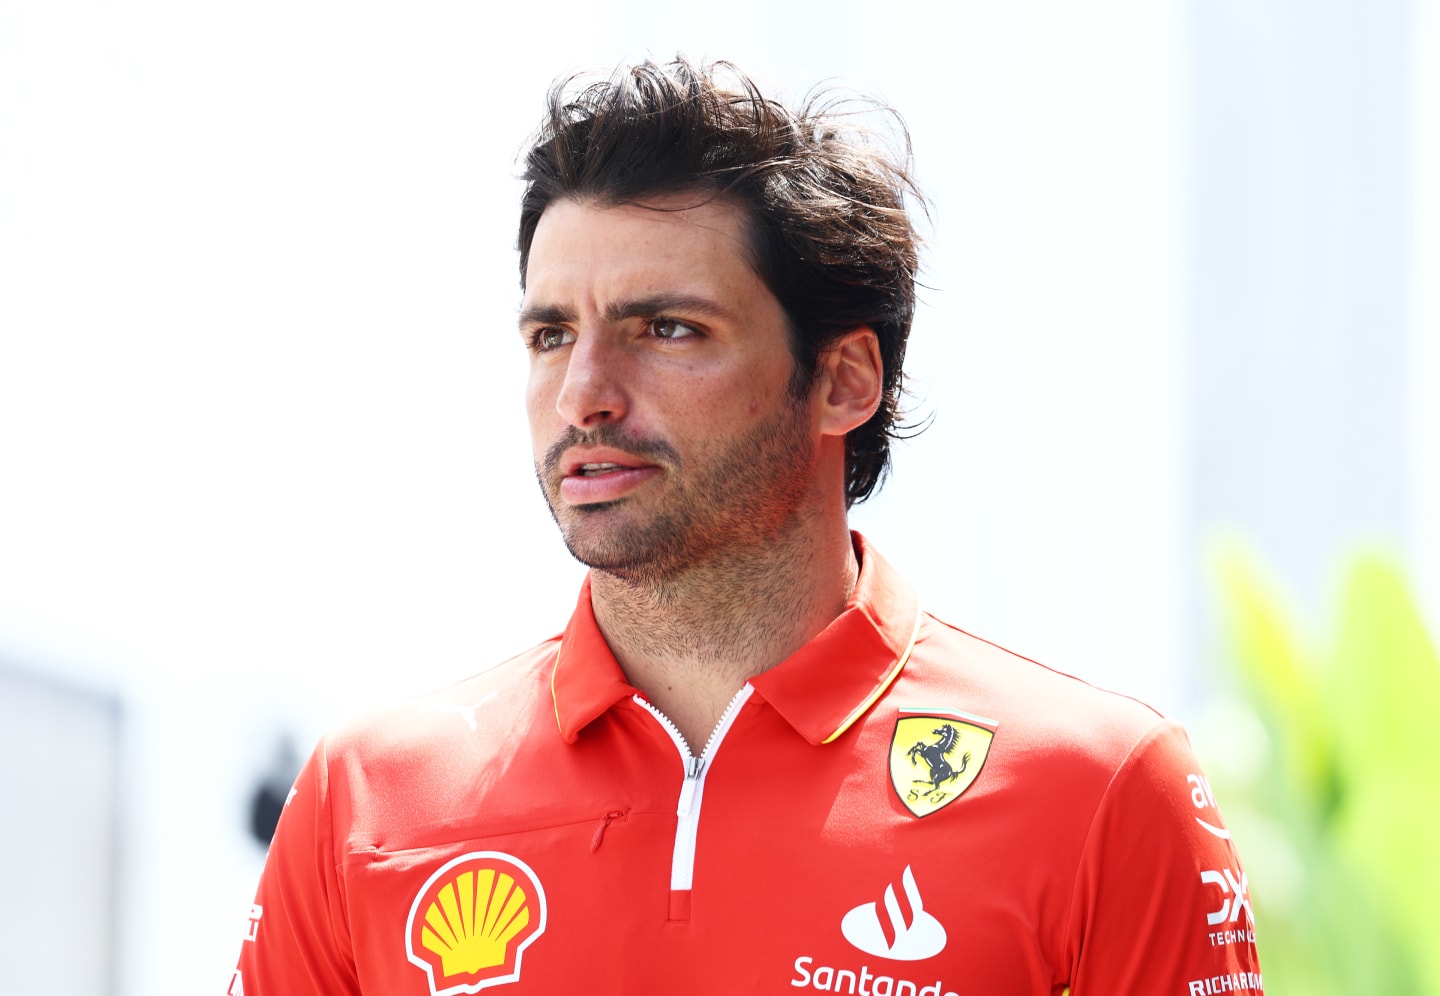 JEDDAH, SAUDI ARABIA - MARCH 06: Carlos Sainz of Spain and Ferrari walks in the Paddock during